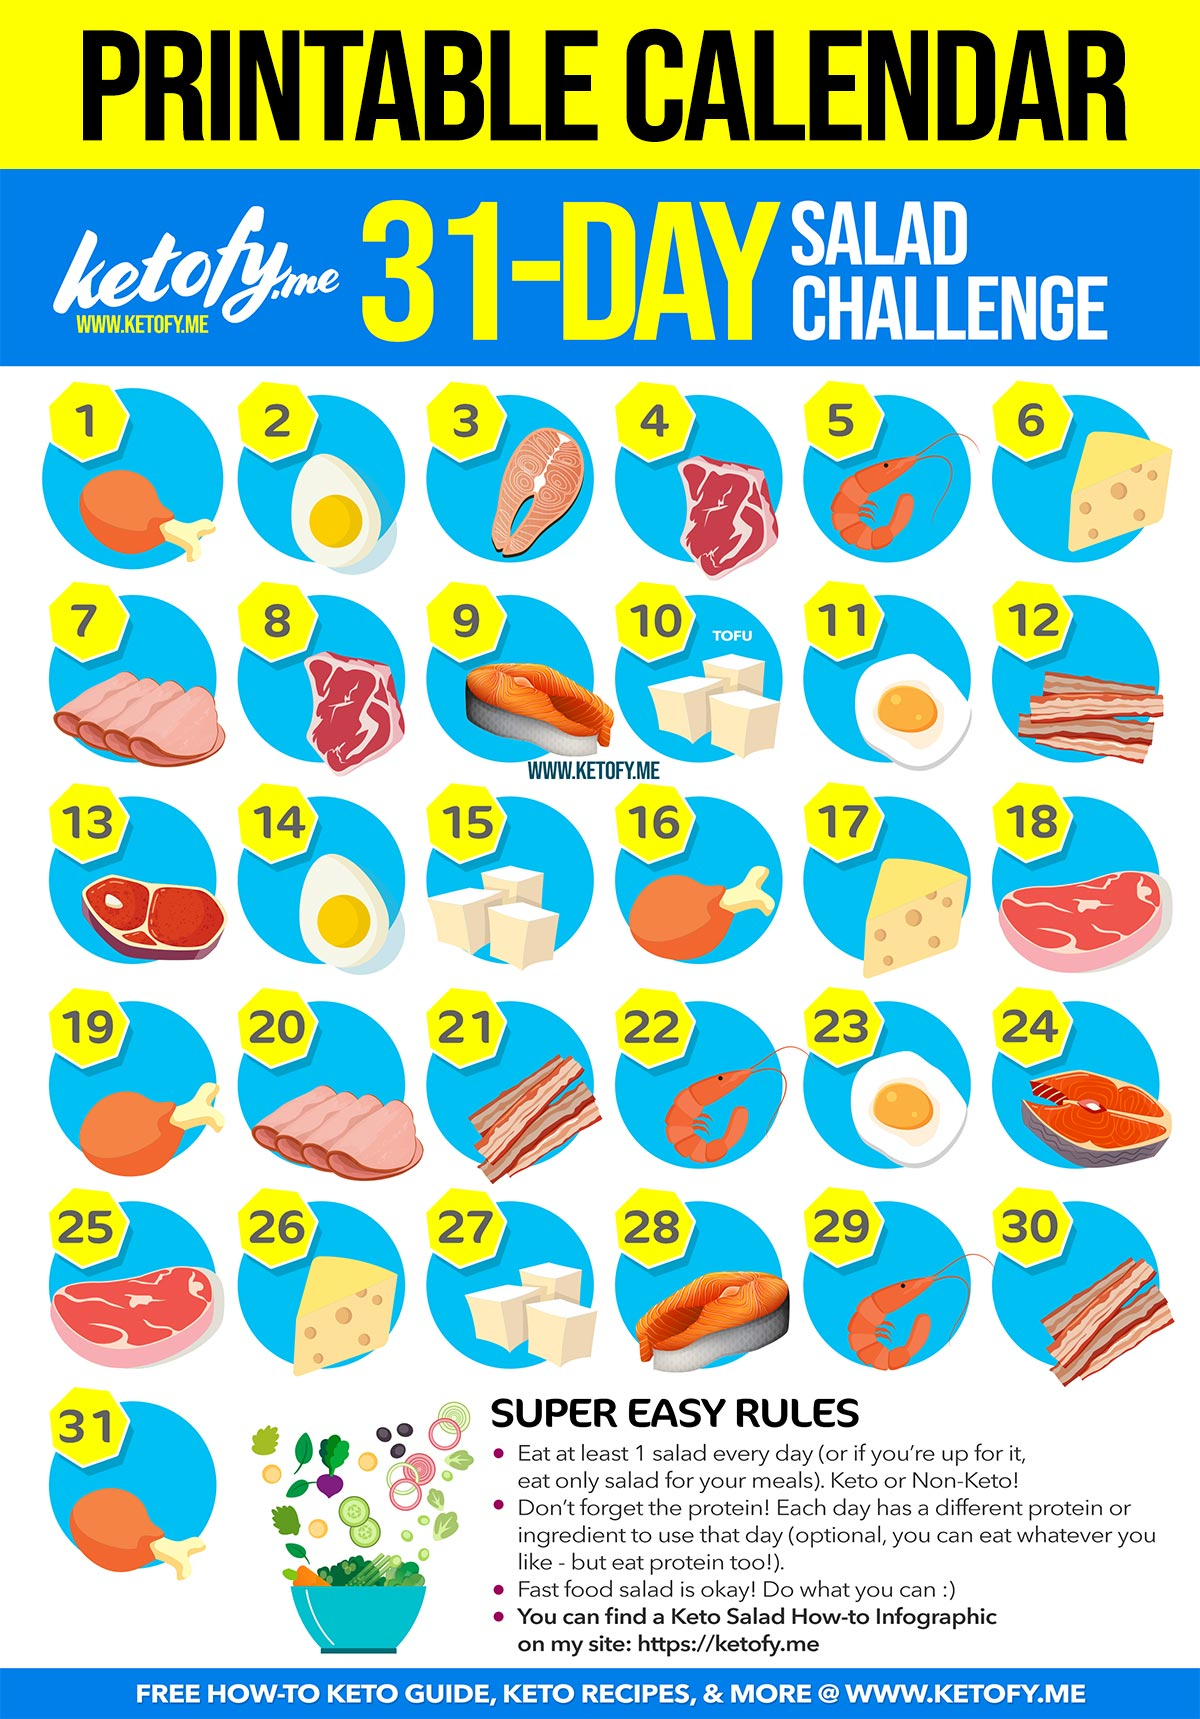 Keto ~ Fy Me | Cut Carbs, Not Flavor! • 31 Days Keto Salad in 100 Days Of Keto Calendar